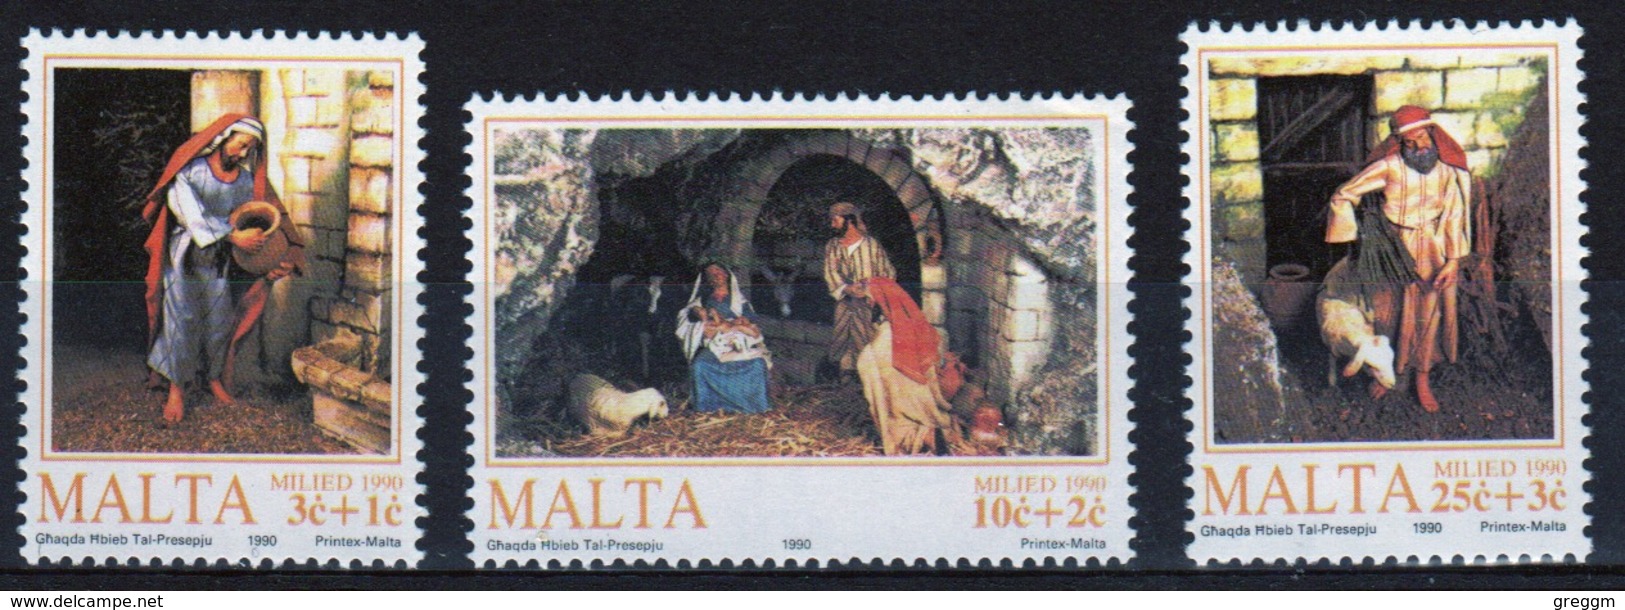 Malta 1990 Set Of Stamps To Celebrate Christmas. - Malta